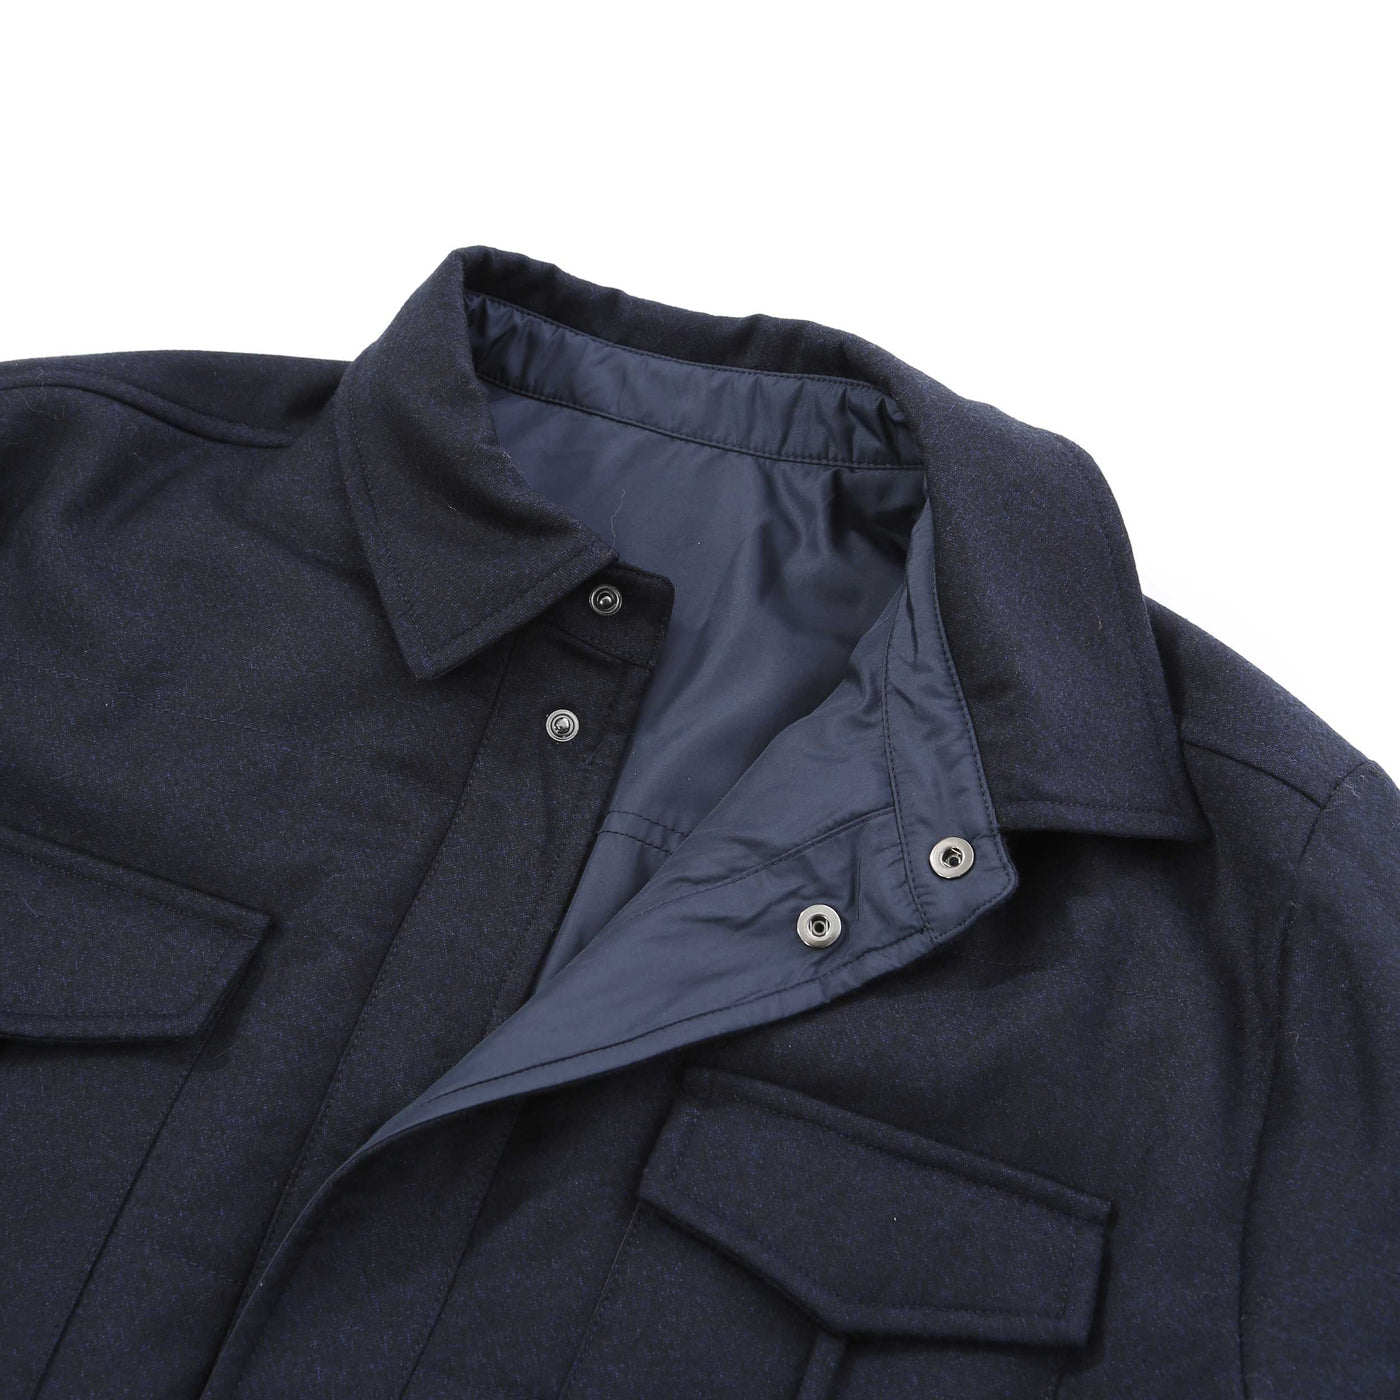 Canali Wool Flannel Jacket in Navy Stud Fastening